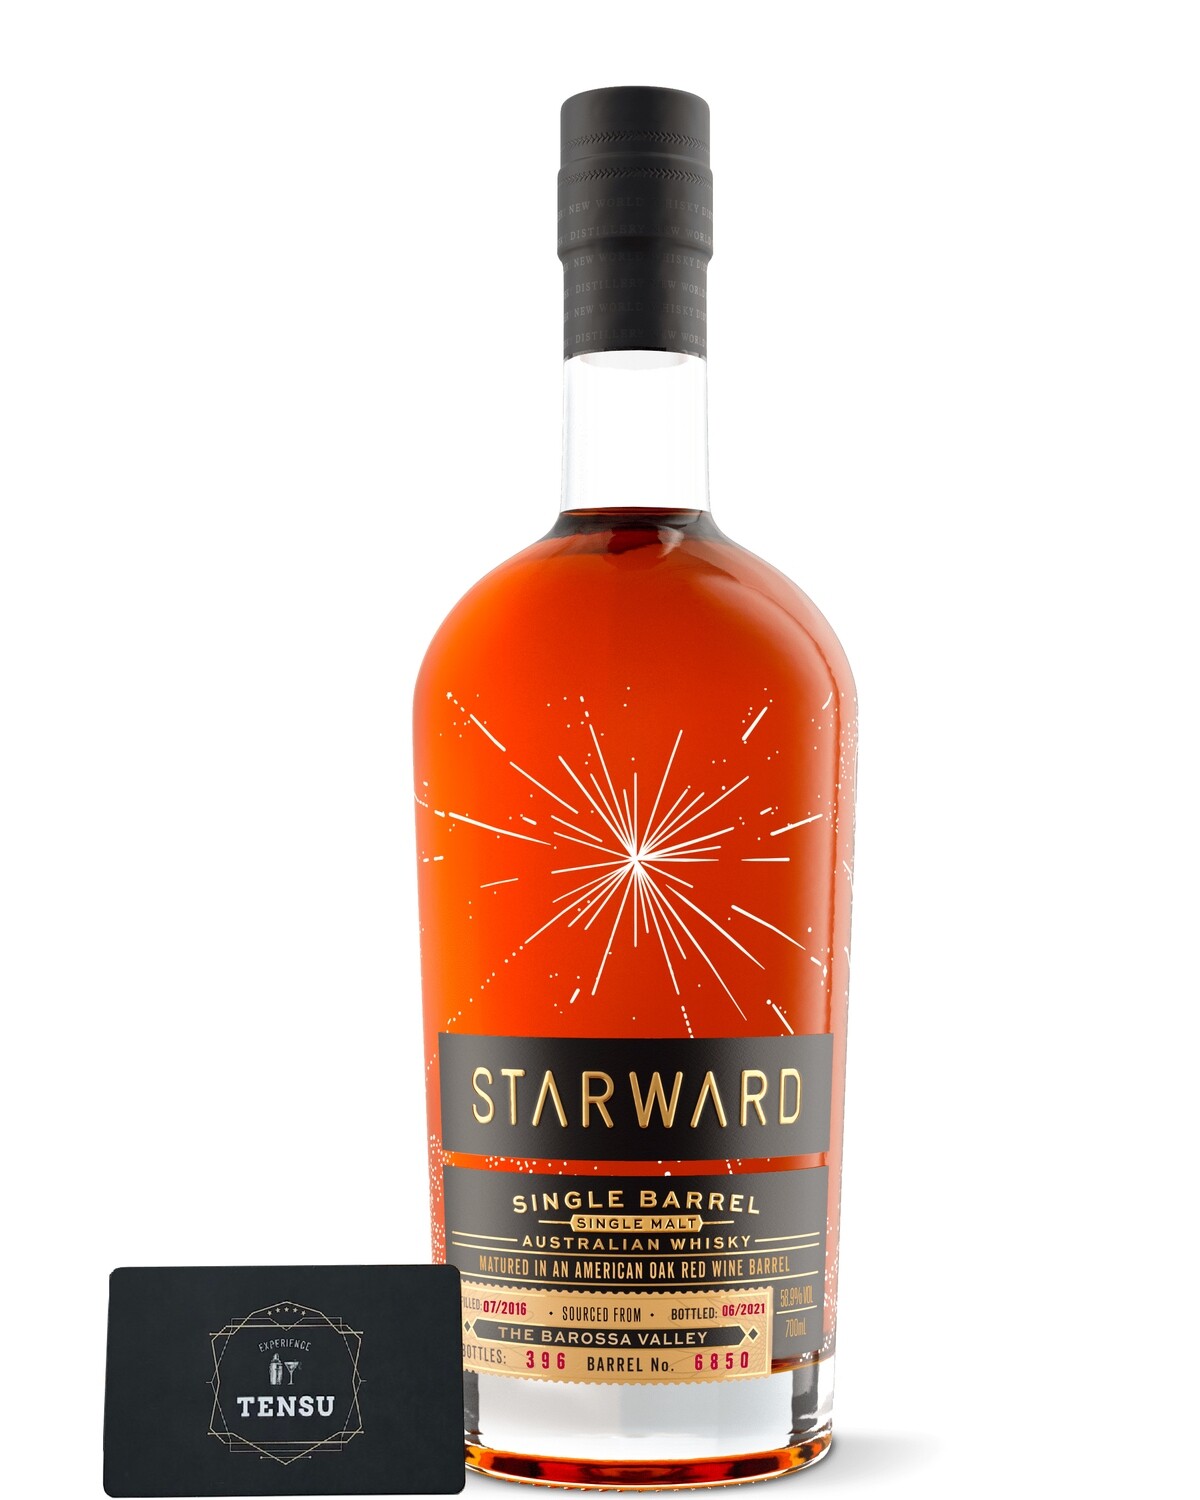 Starward Single Barrel - Single Malt Australian Whisky (2016-2021) 58,9 "For The Nectar"